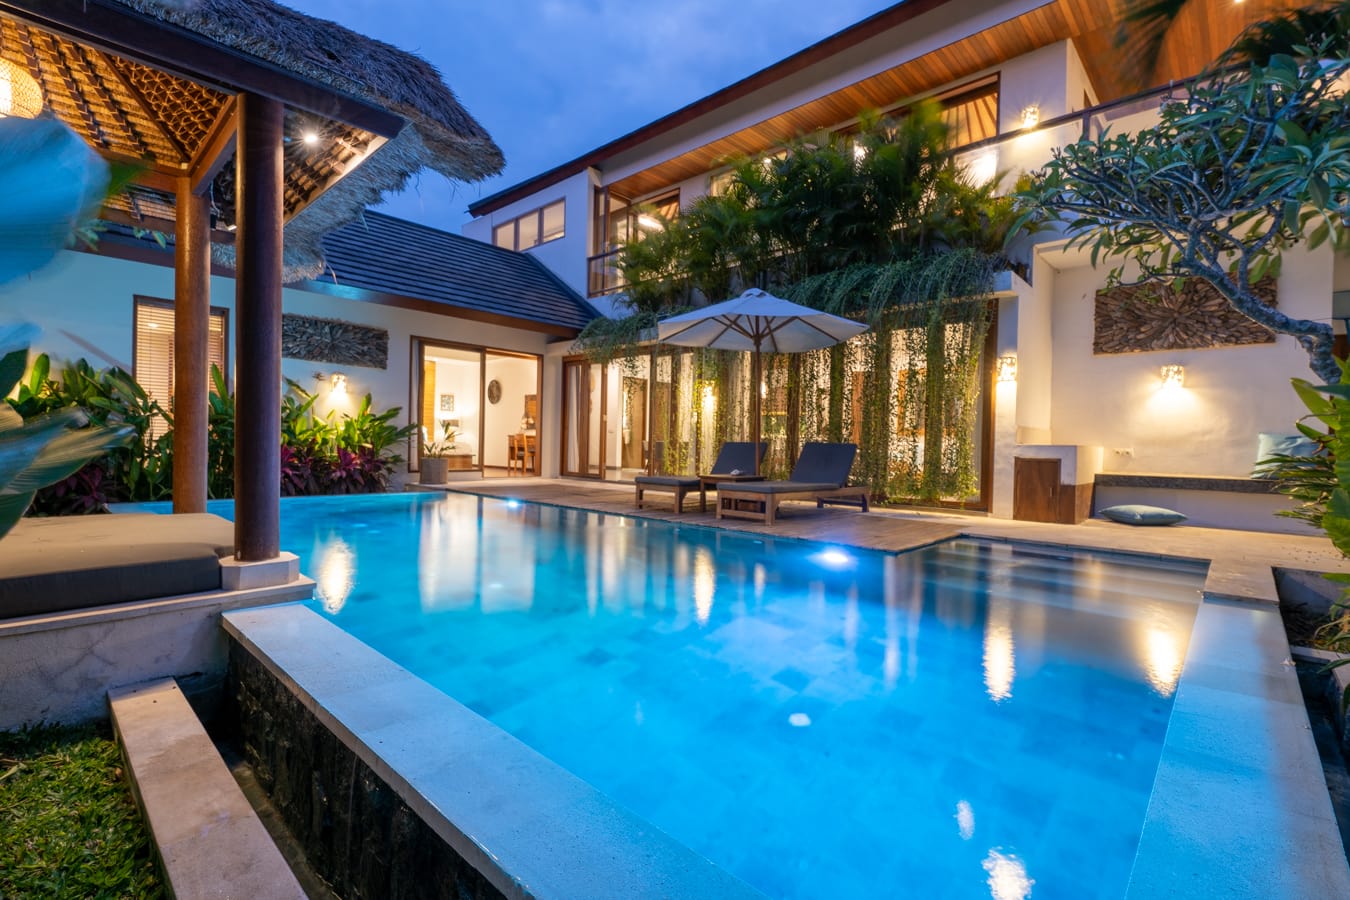 Antara Villa - Balitecture - Bali Architect and Builder Portfolio (20)